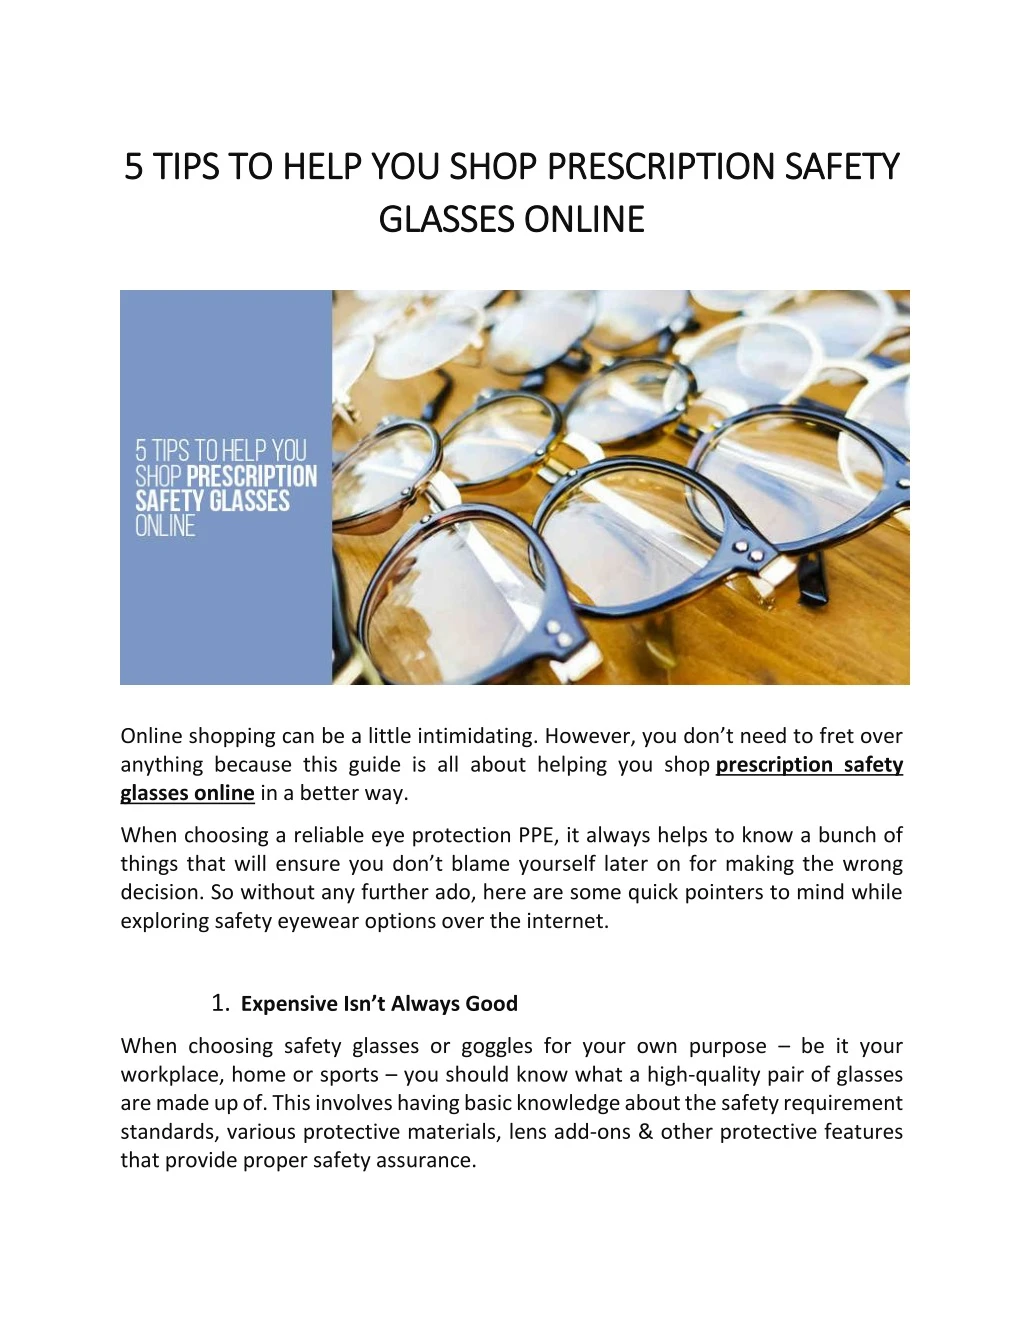 5 tips to help you shop prescription safety